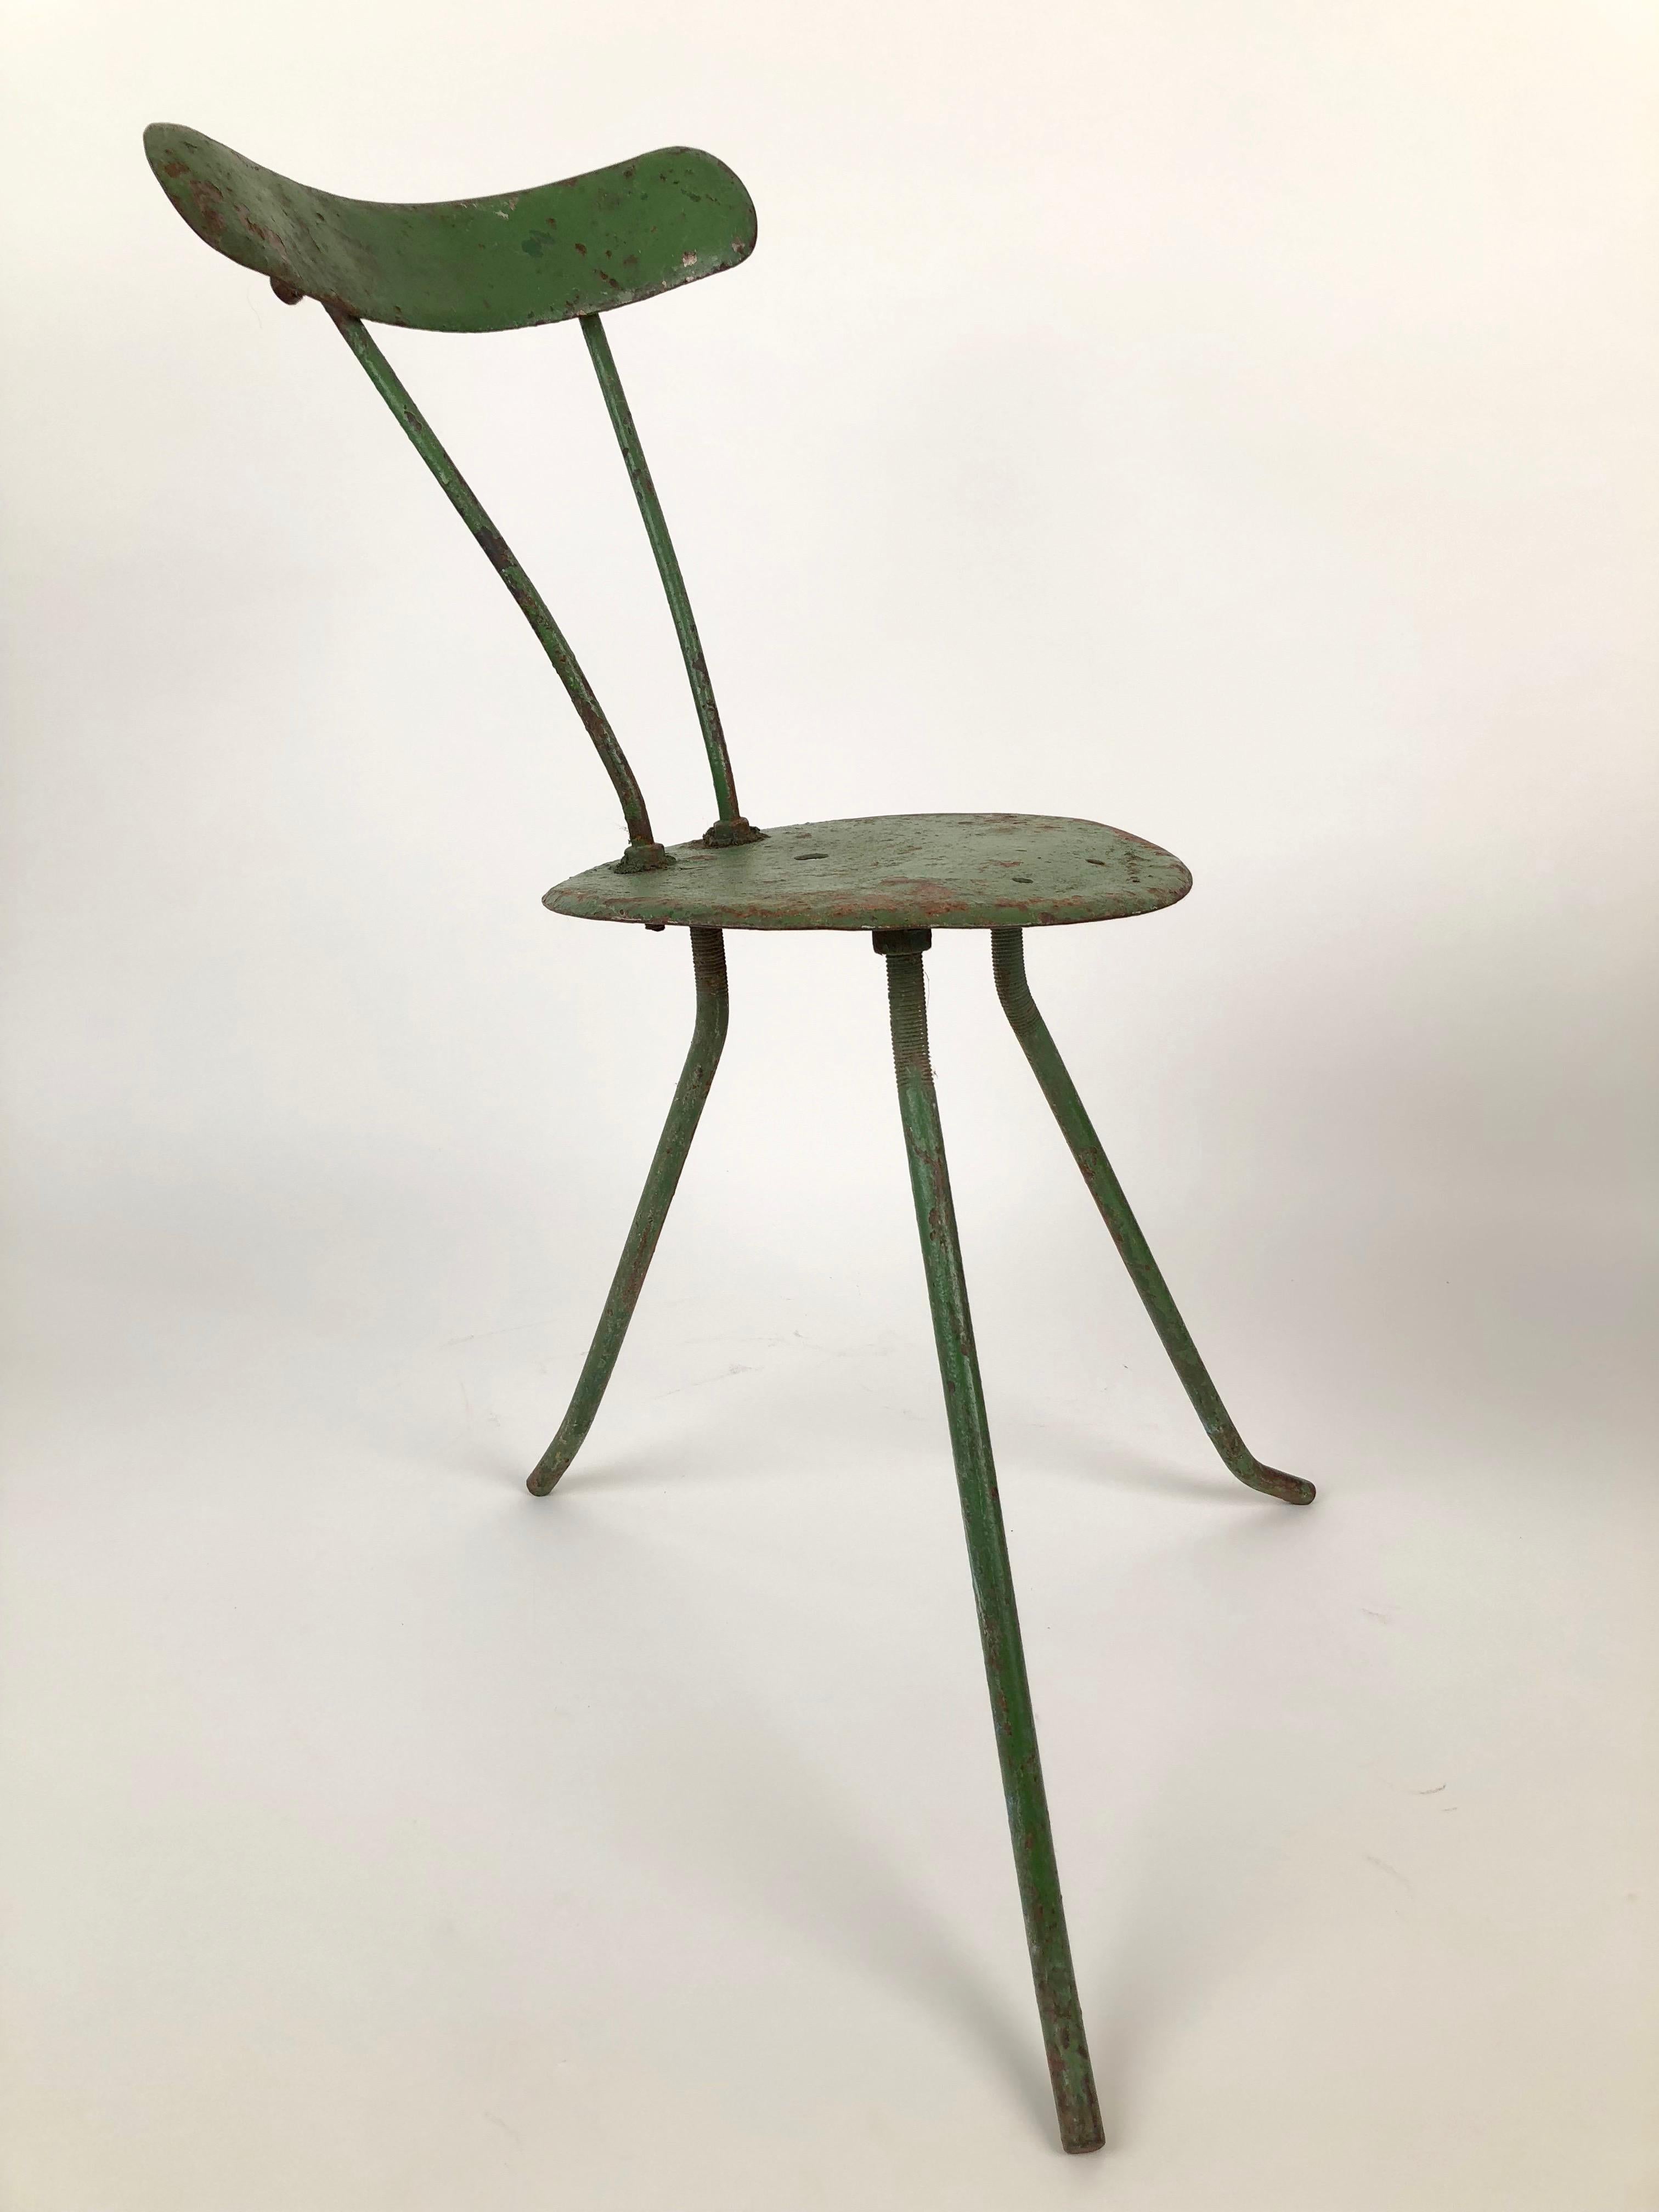 Pair of Handmade Metal Chairs, 1950s, from the Balaton Lake Region, Hungary For Sale 2